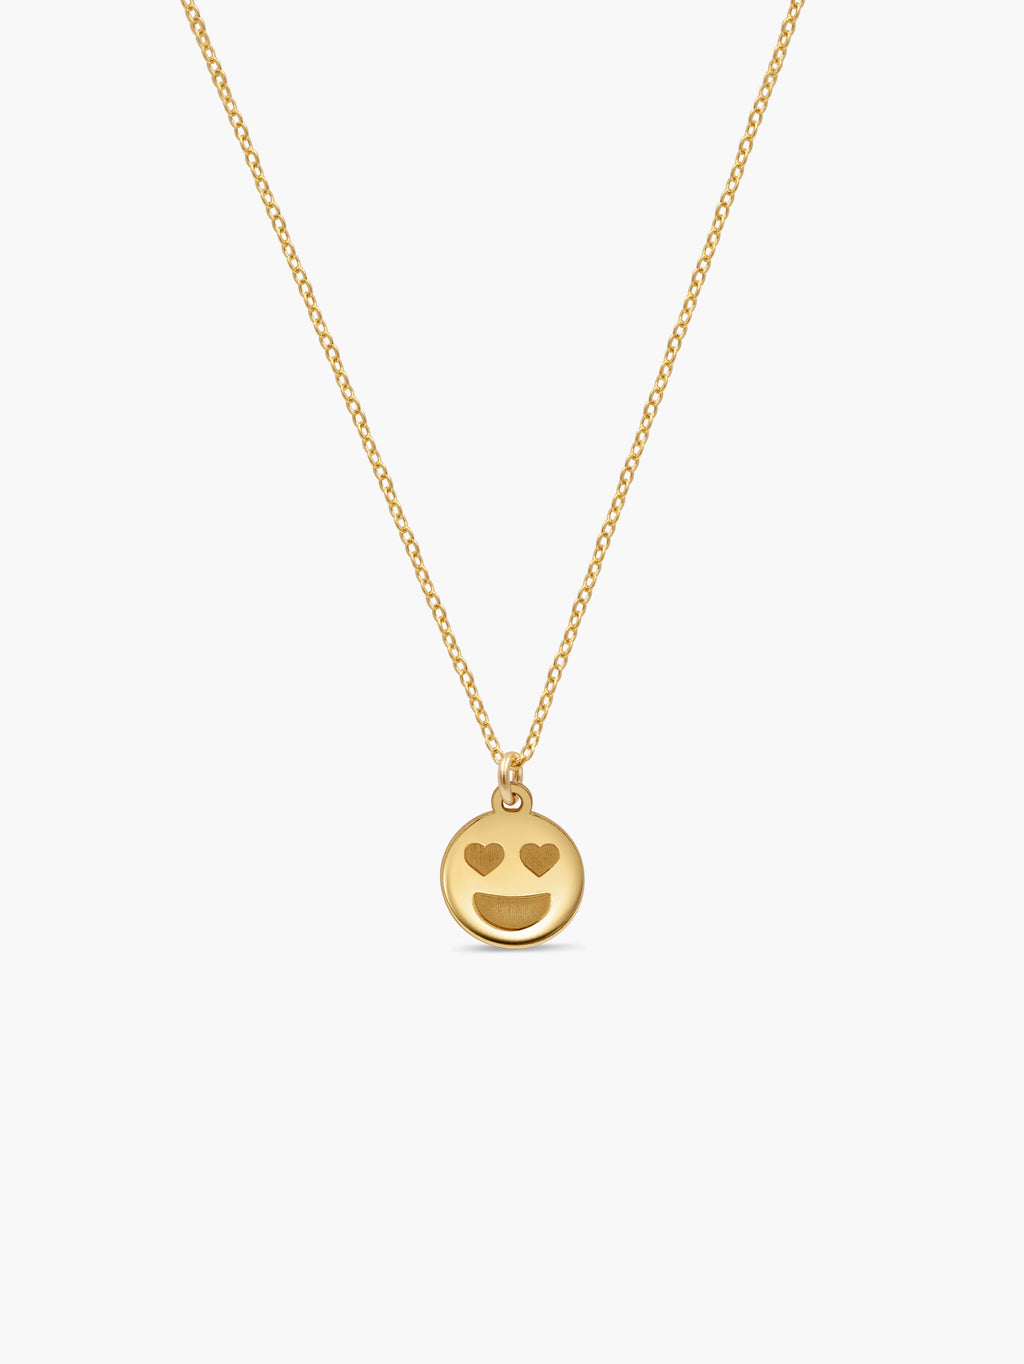 Emoji Necklace - Heart Eyes